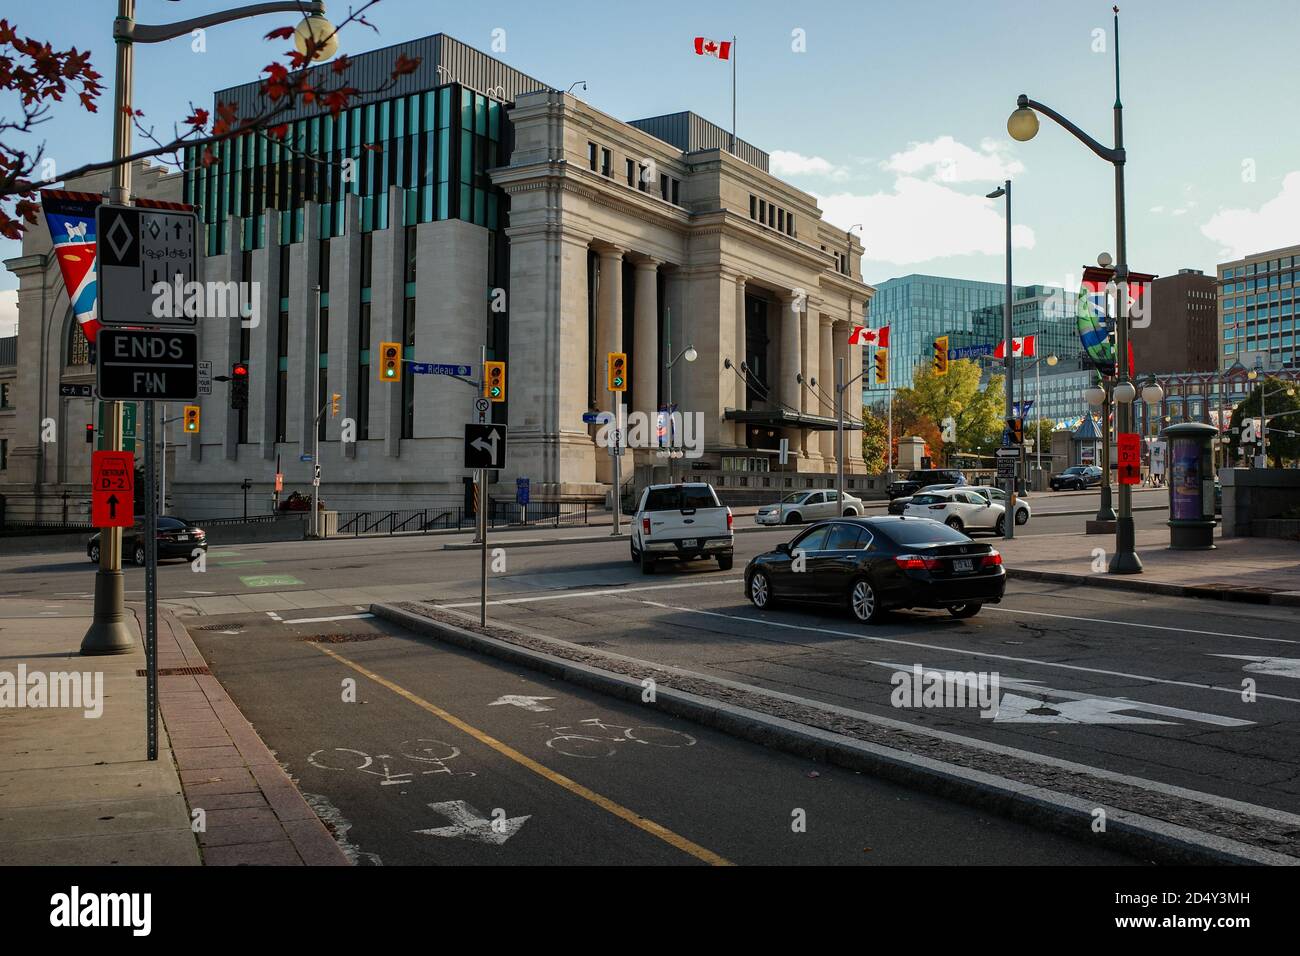 Ottawa, Ontario, Canada - October 8, 2020: The Senate of Canada building on Rideau Street in downtown Ottawa. Stock Photo